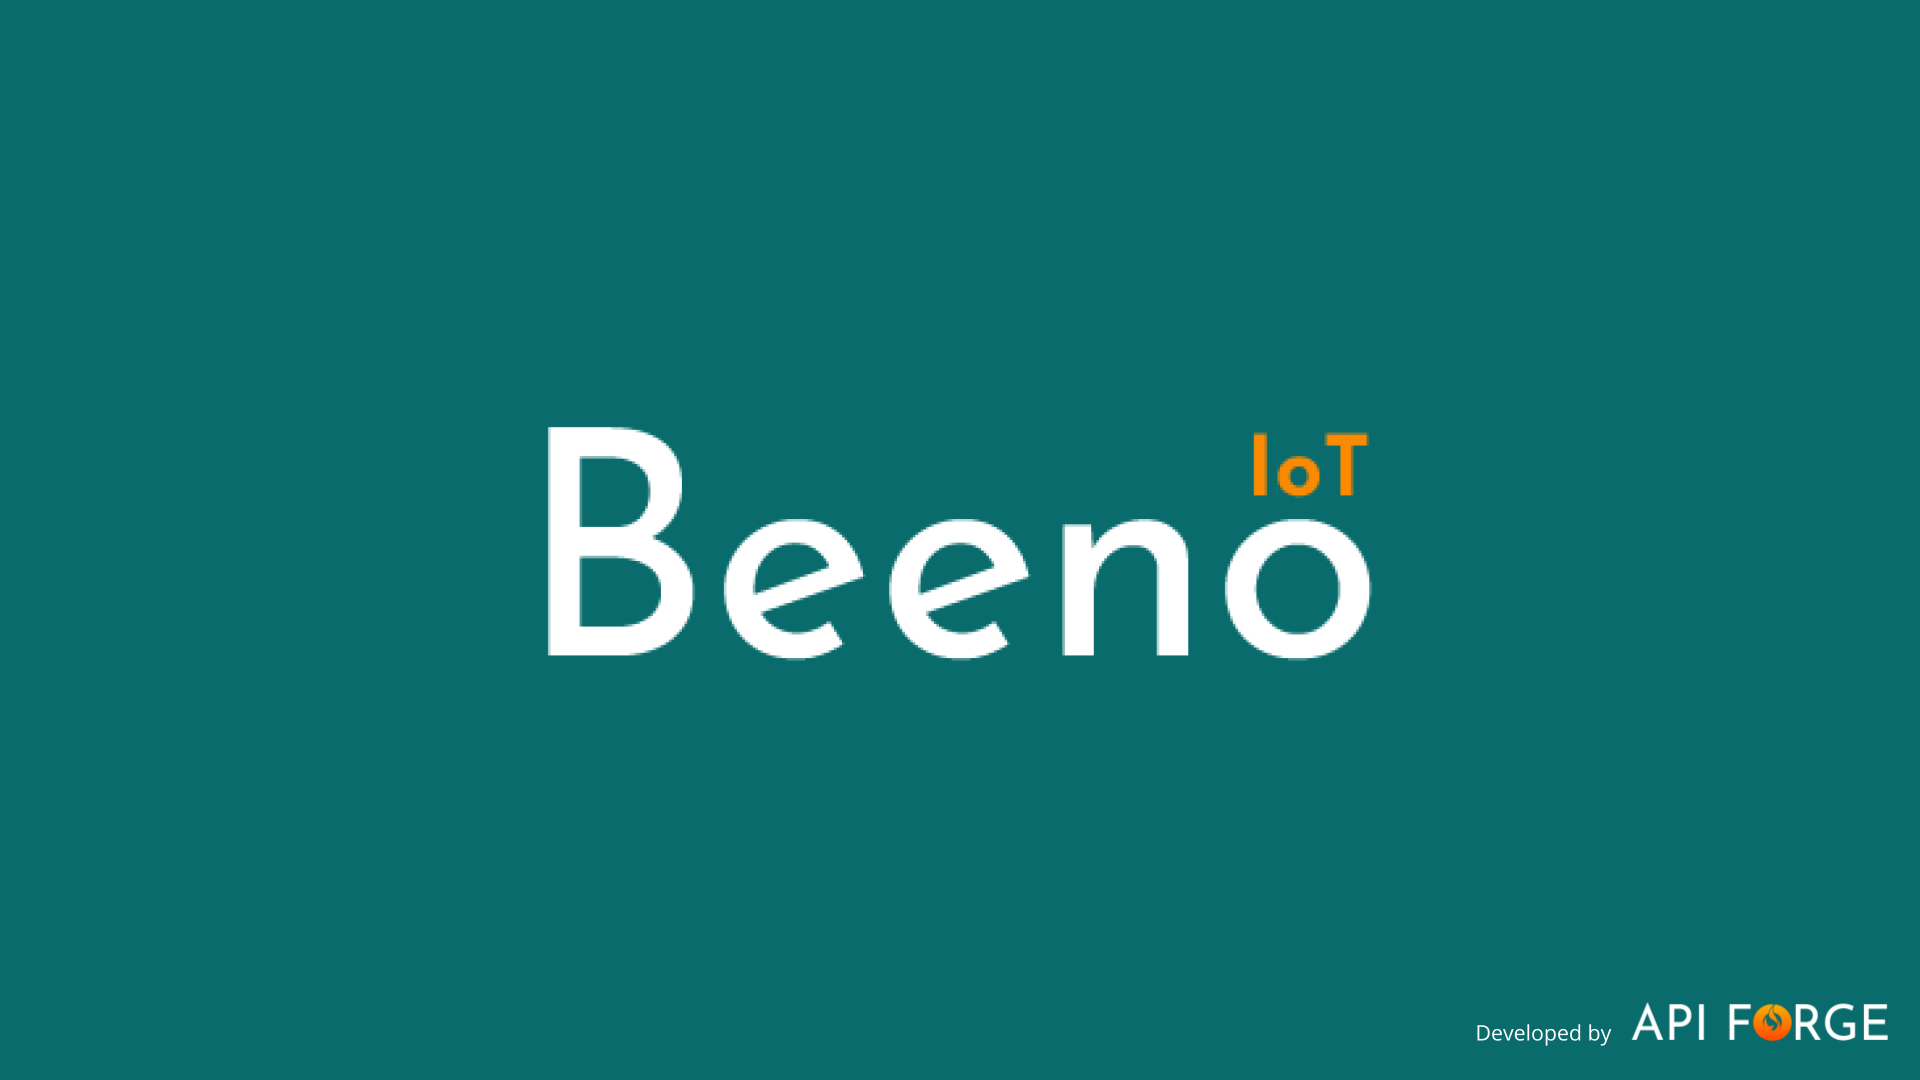 Beeno: IoT monitoring and analysis.